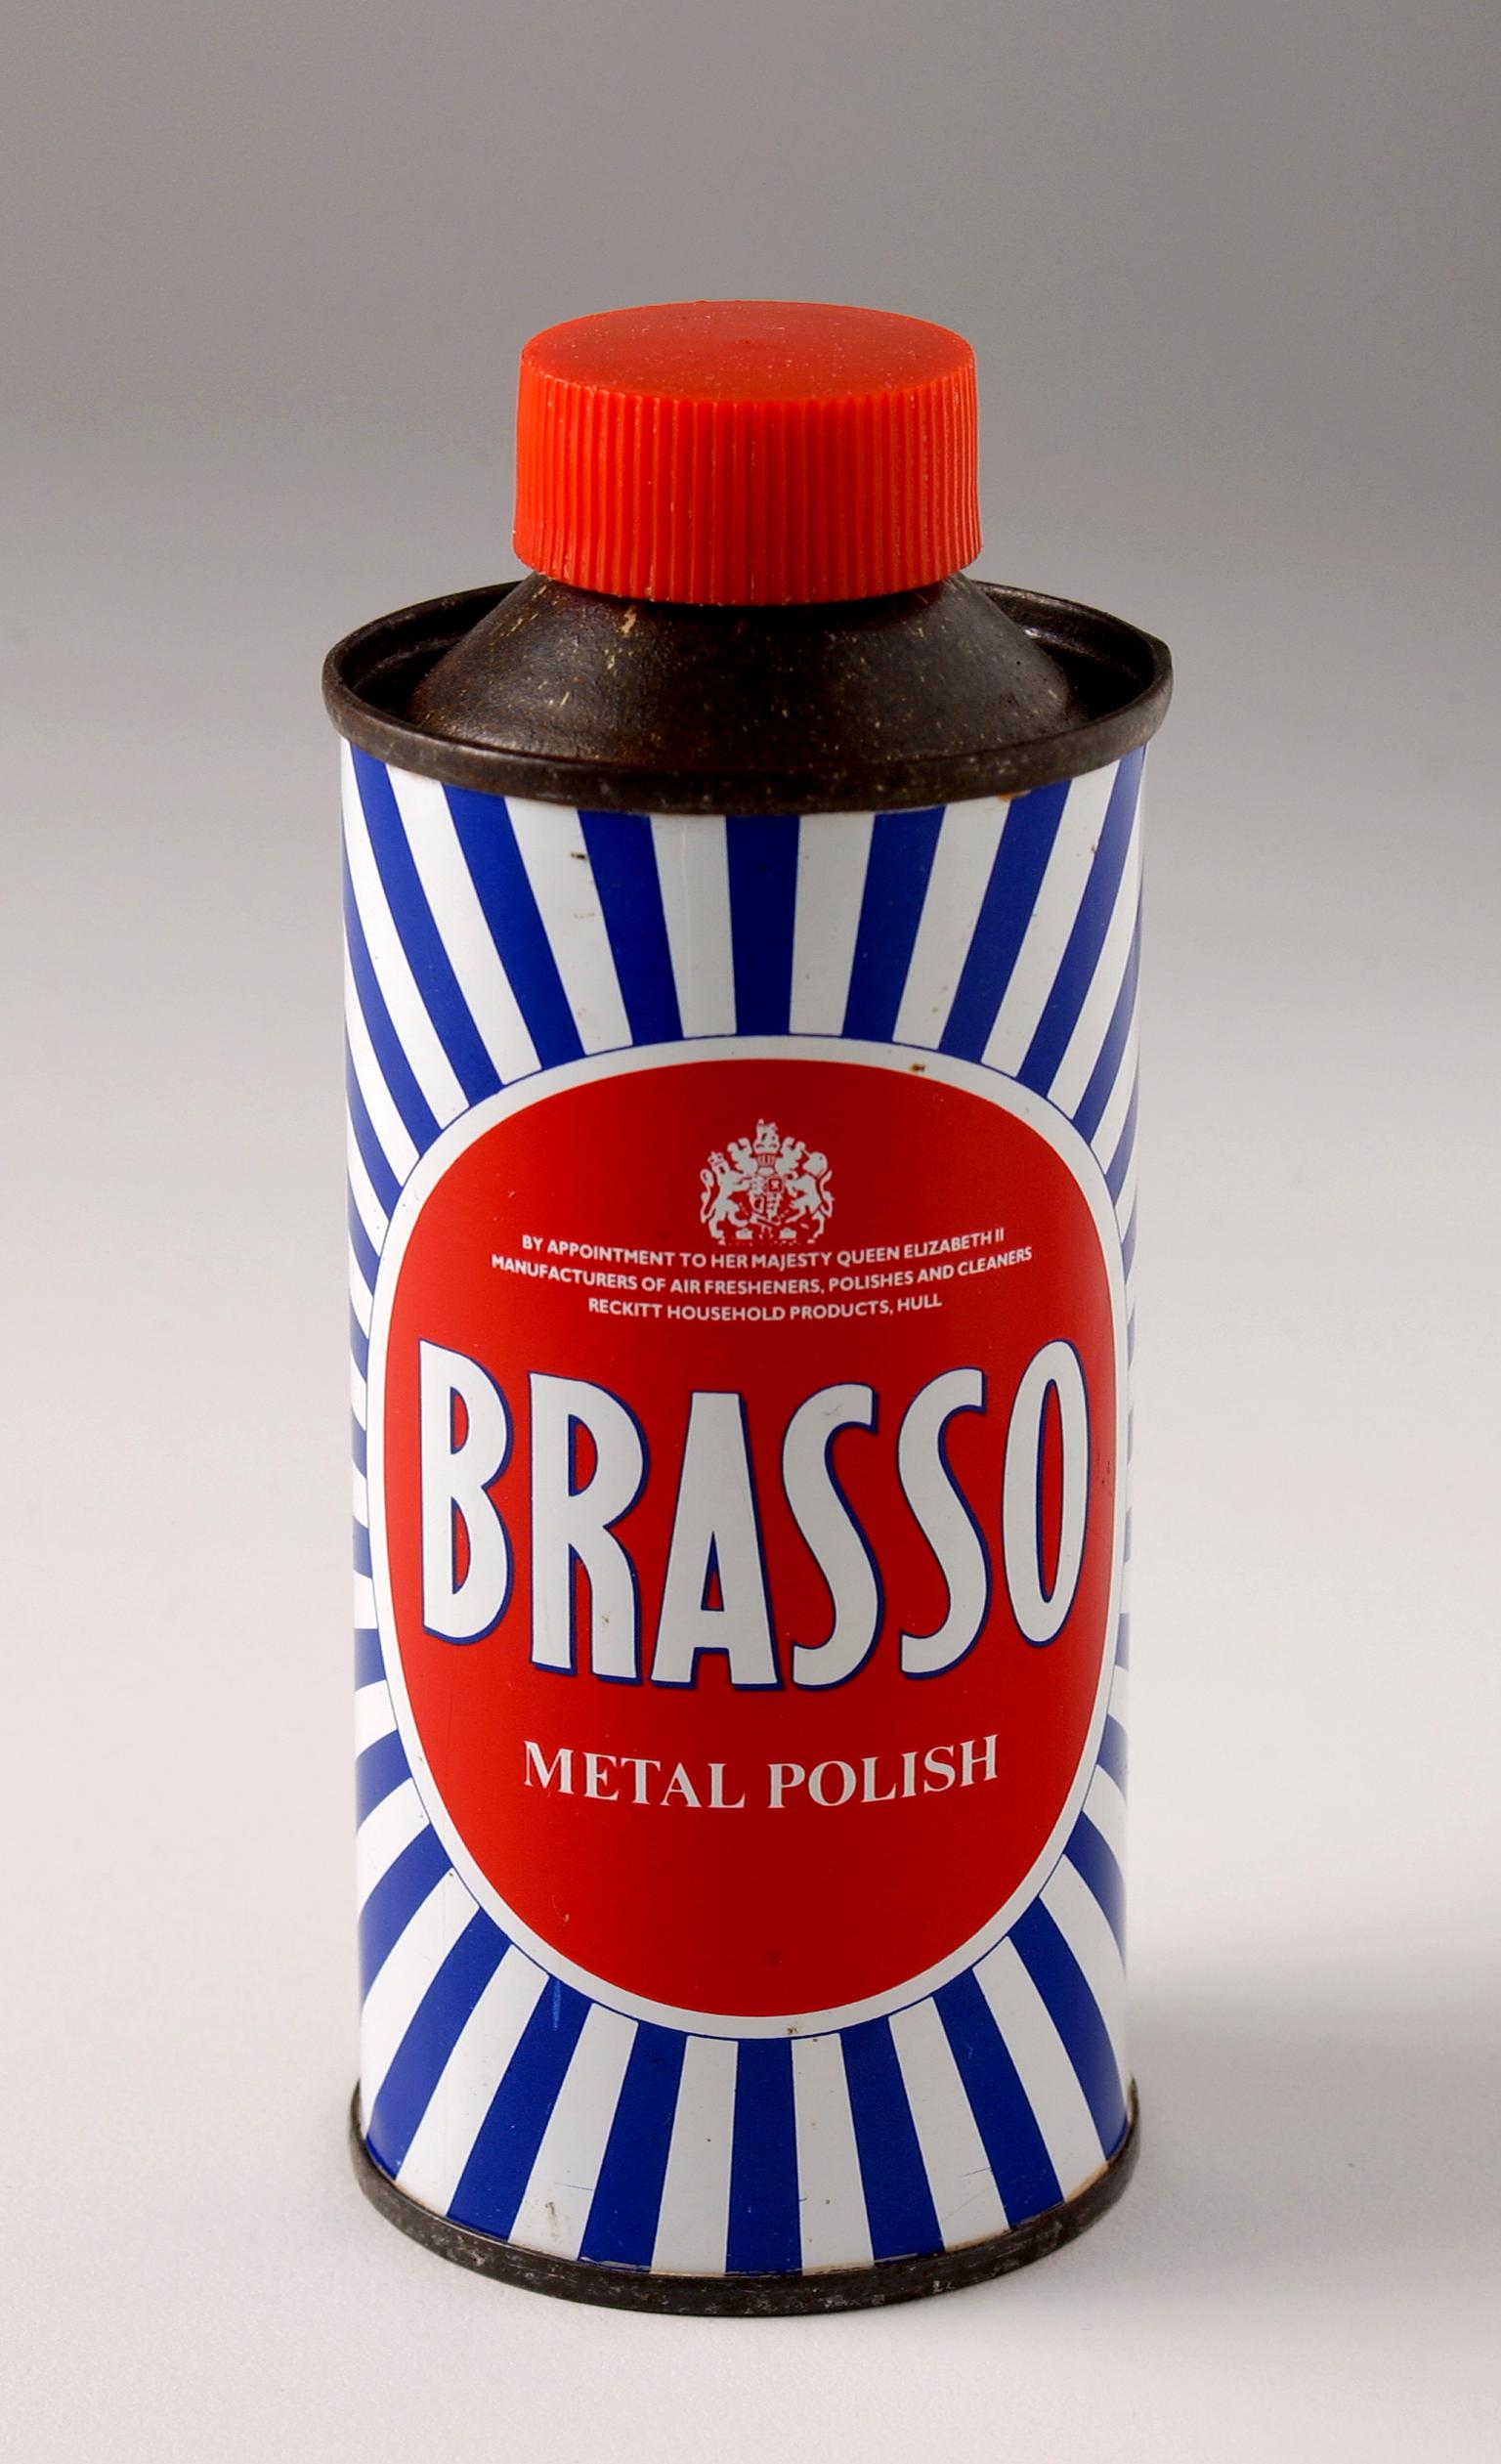 Brasso metal polish tin